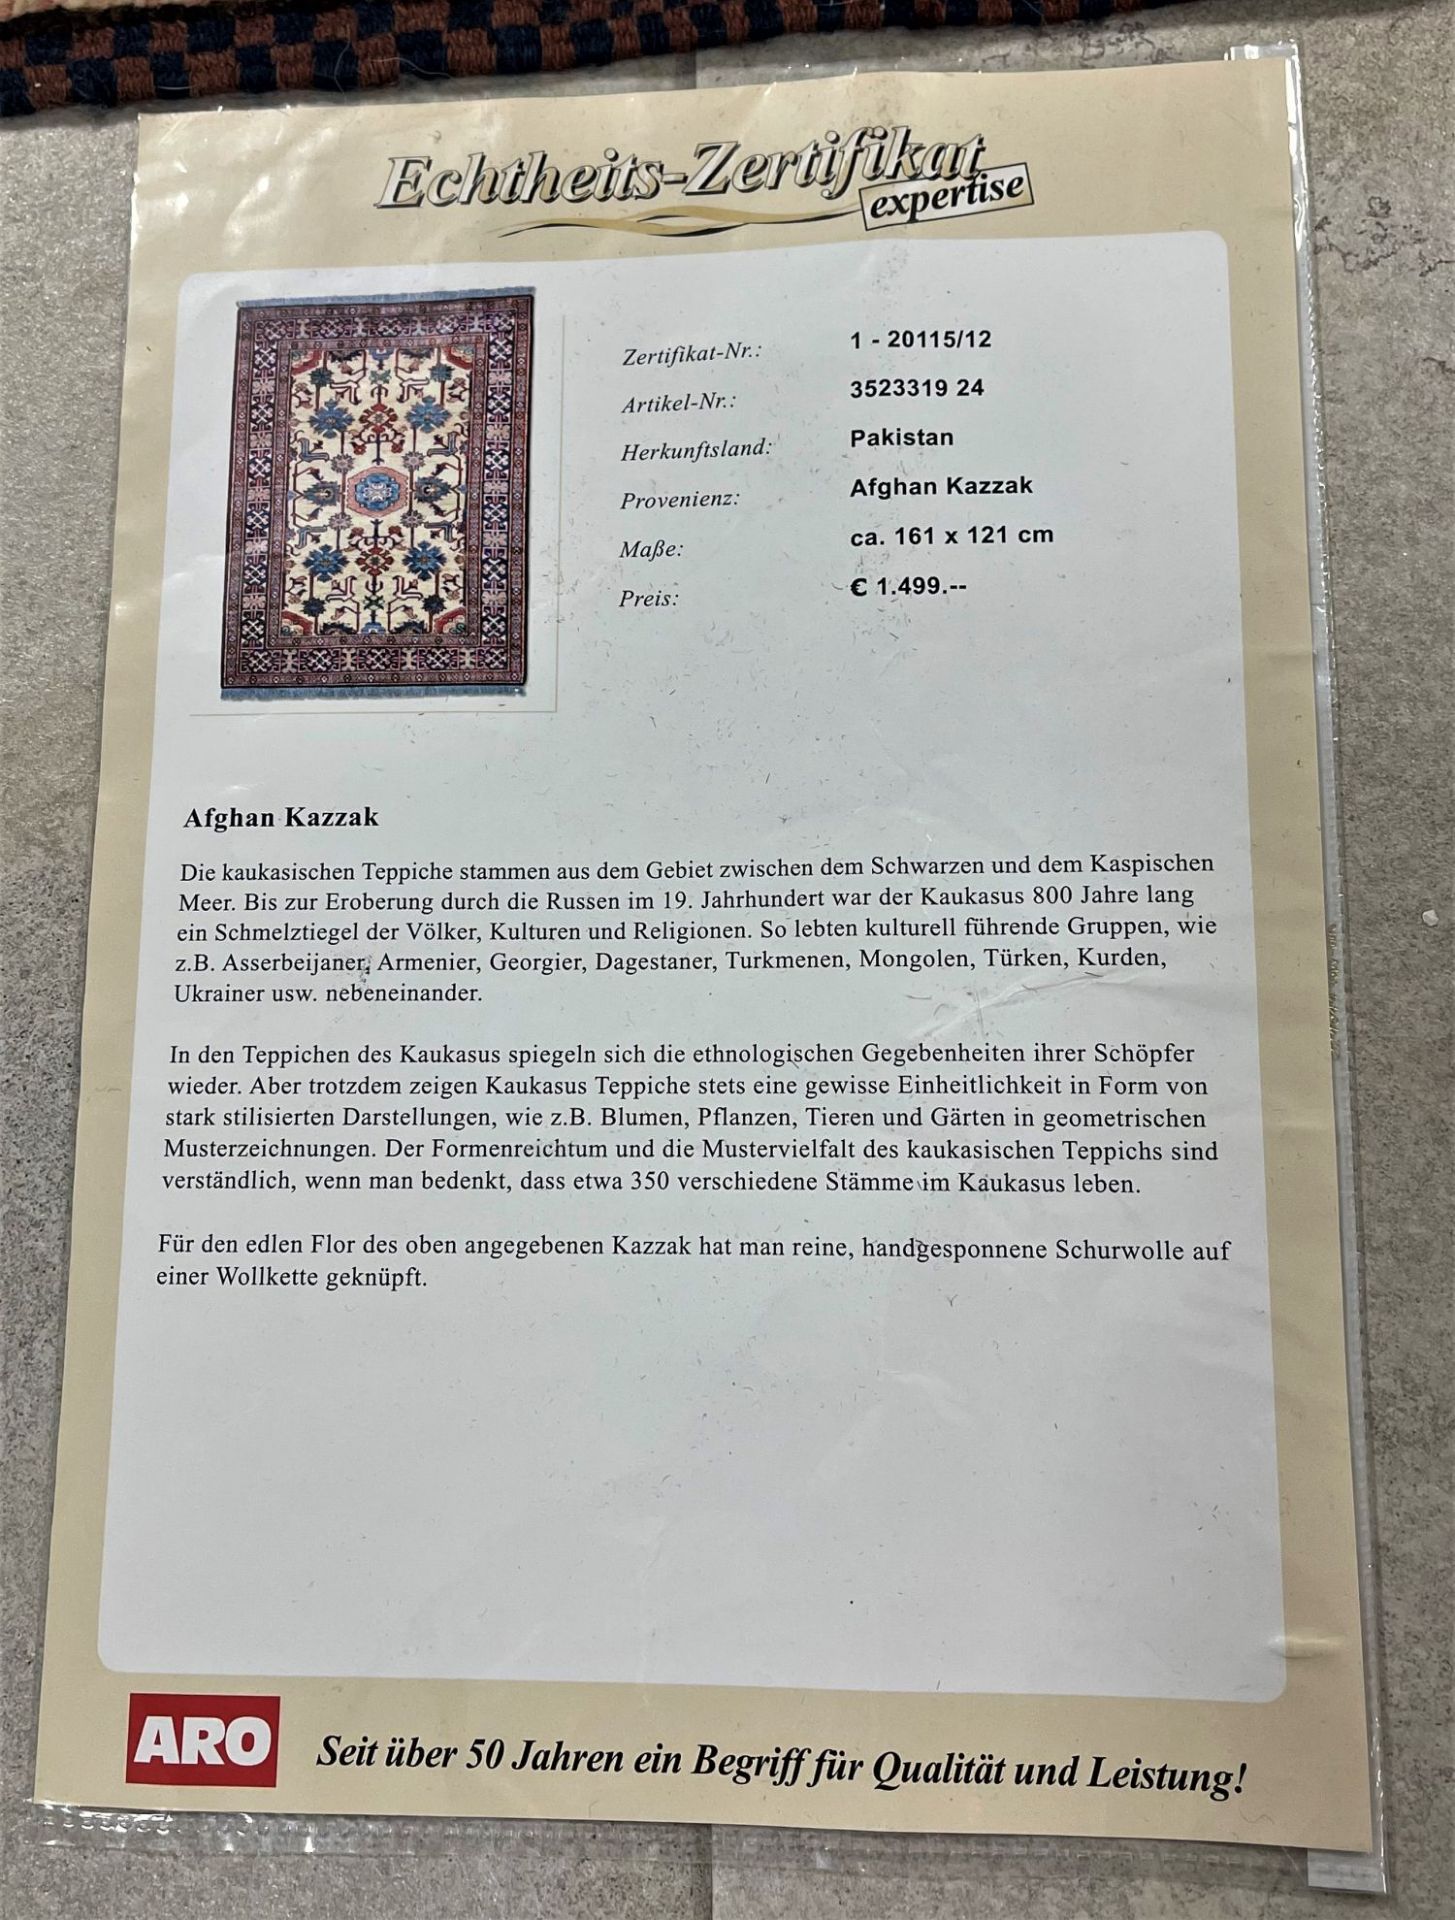 Oriental rug from Pakistan "Afghan Kazzak" - 161 x 121 cm - Image 5 of 7